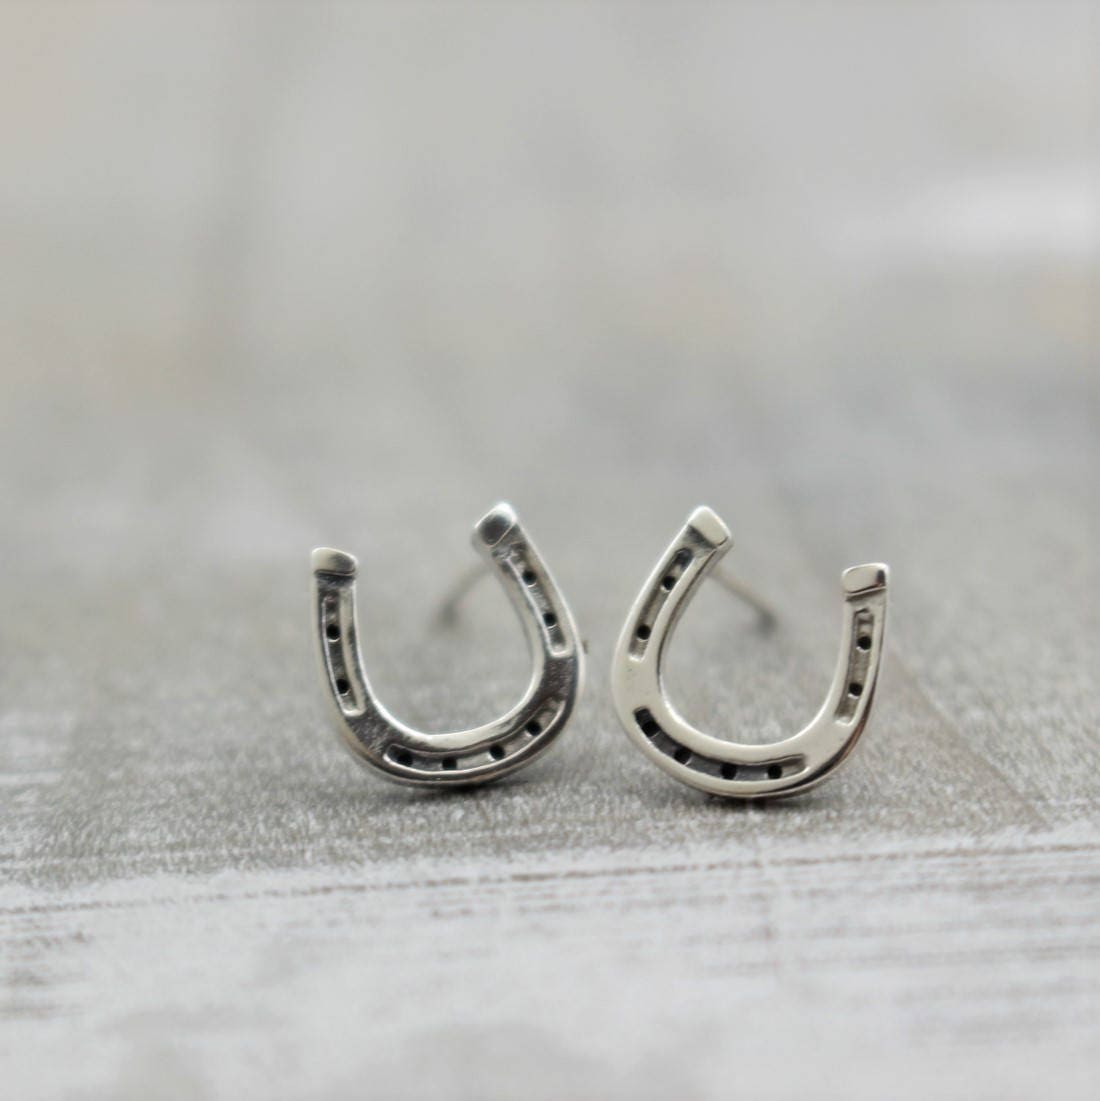 Small Horseshoe Studs - Sterling silver horseshoe earrings - stud earrings - gift for her - jewelry sale